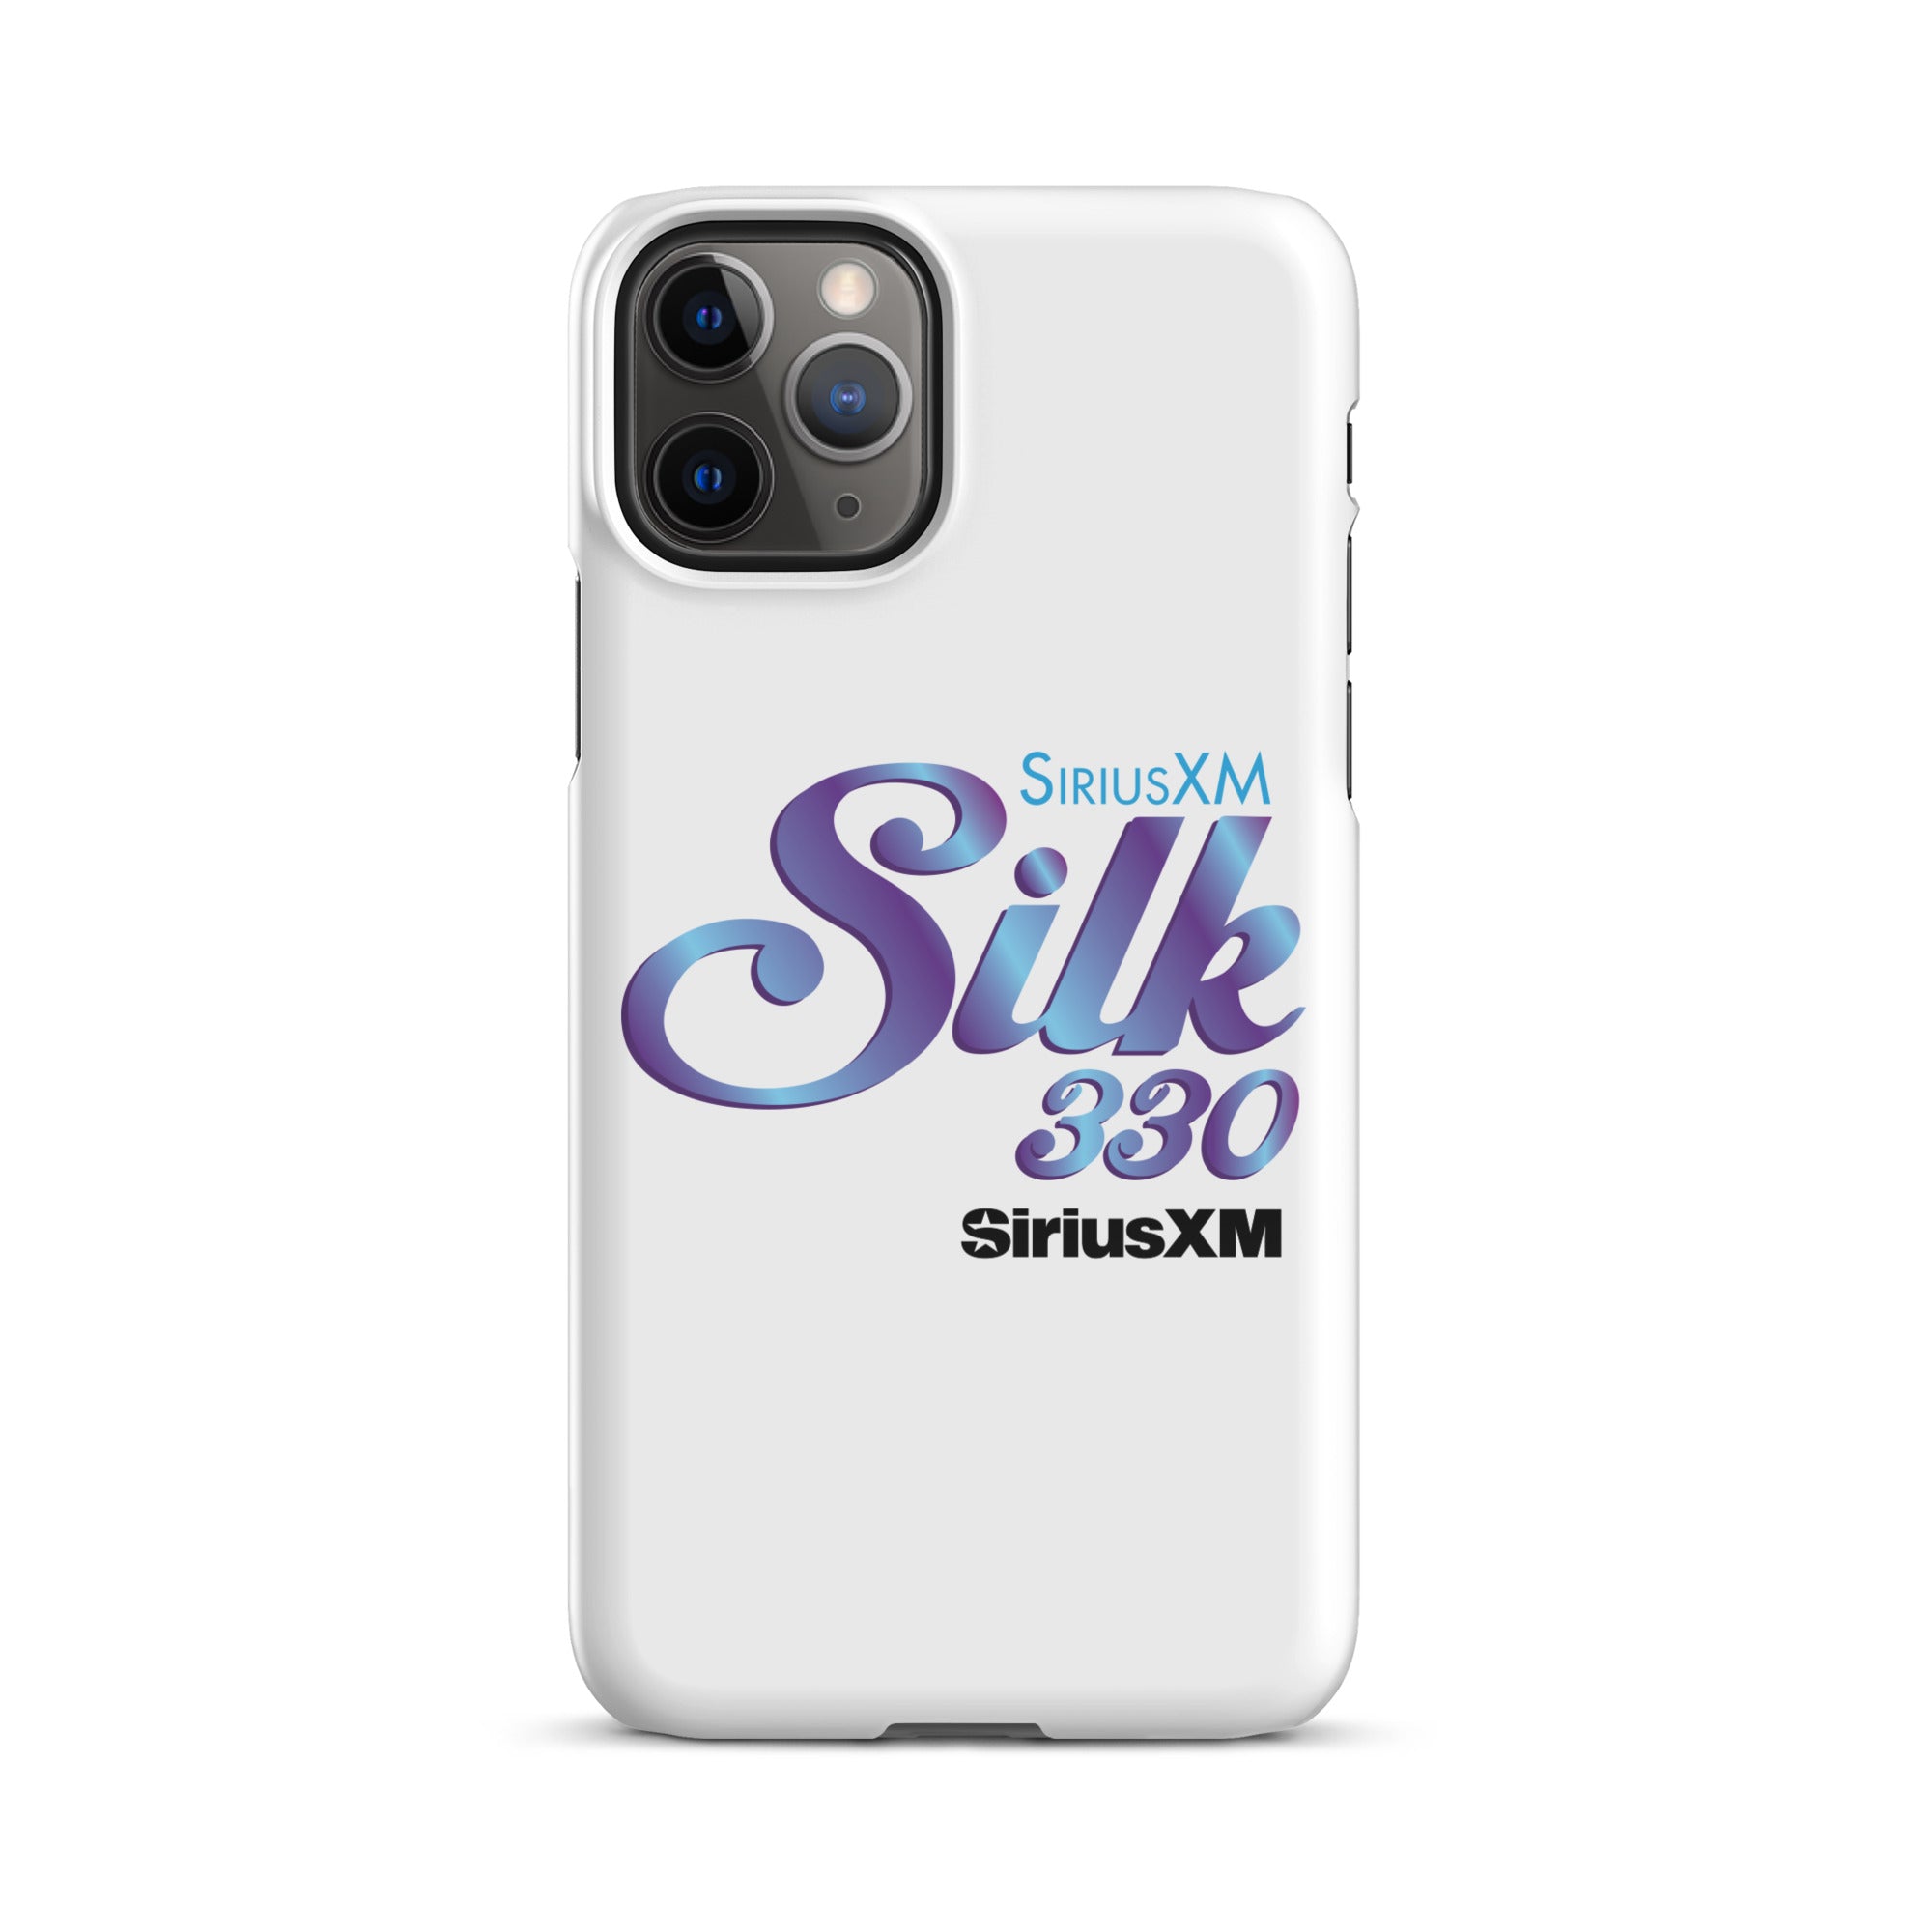 SiriusXM Silk: iPhone® Snap Case